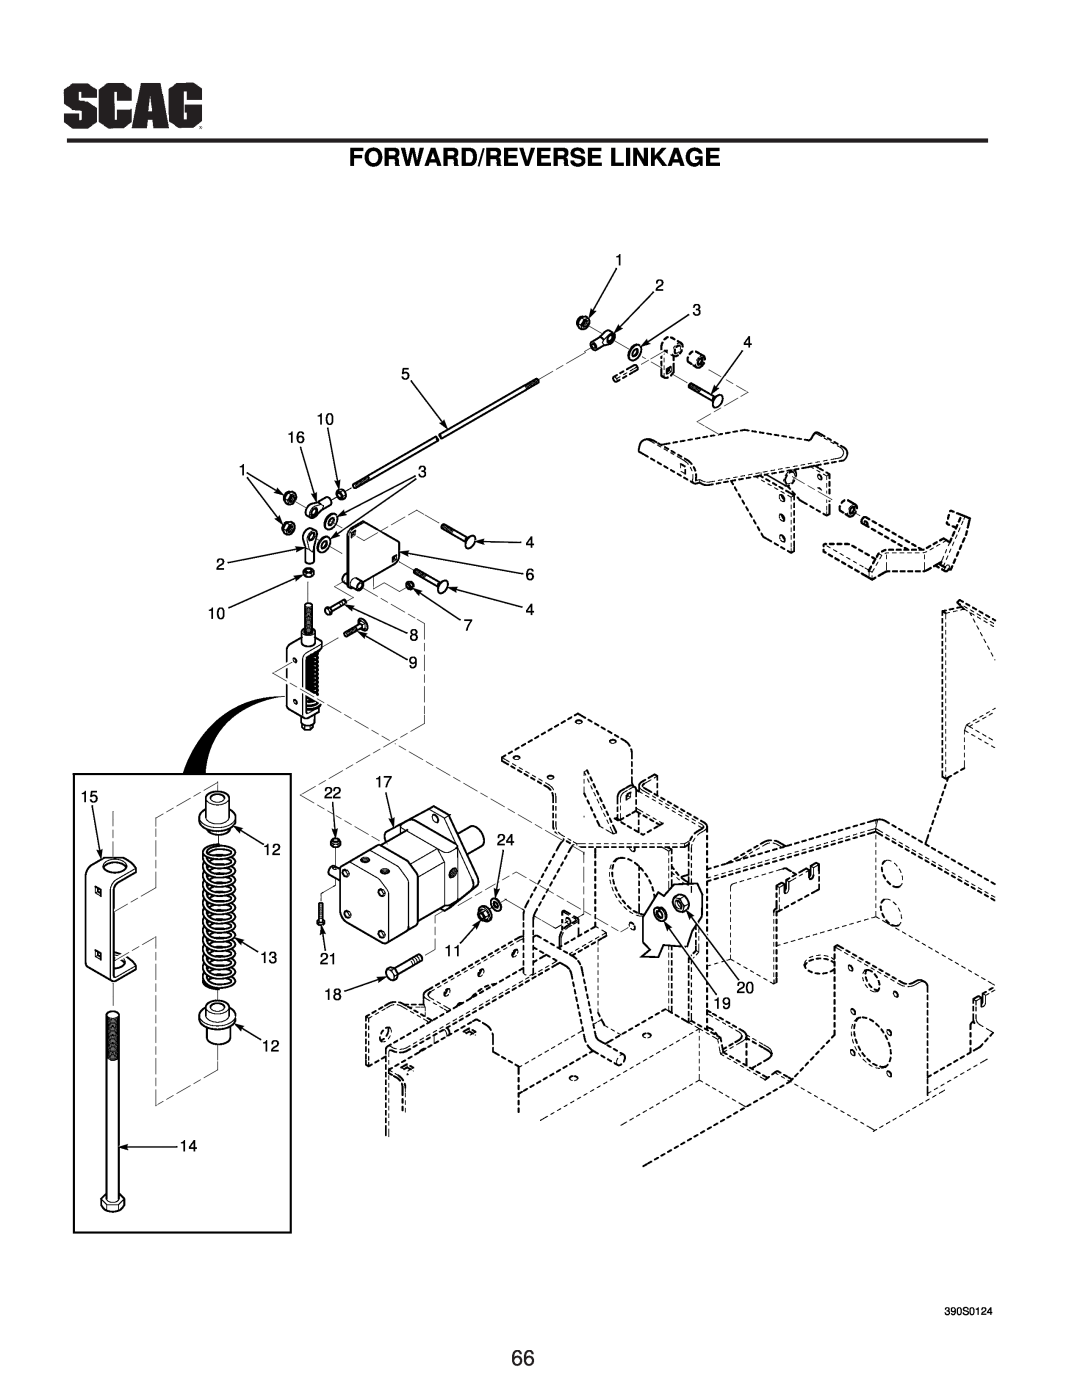 Scag Power Equipment MAG manual Forward/Reverse Linkage, 390S0124 